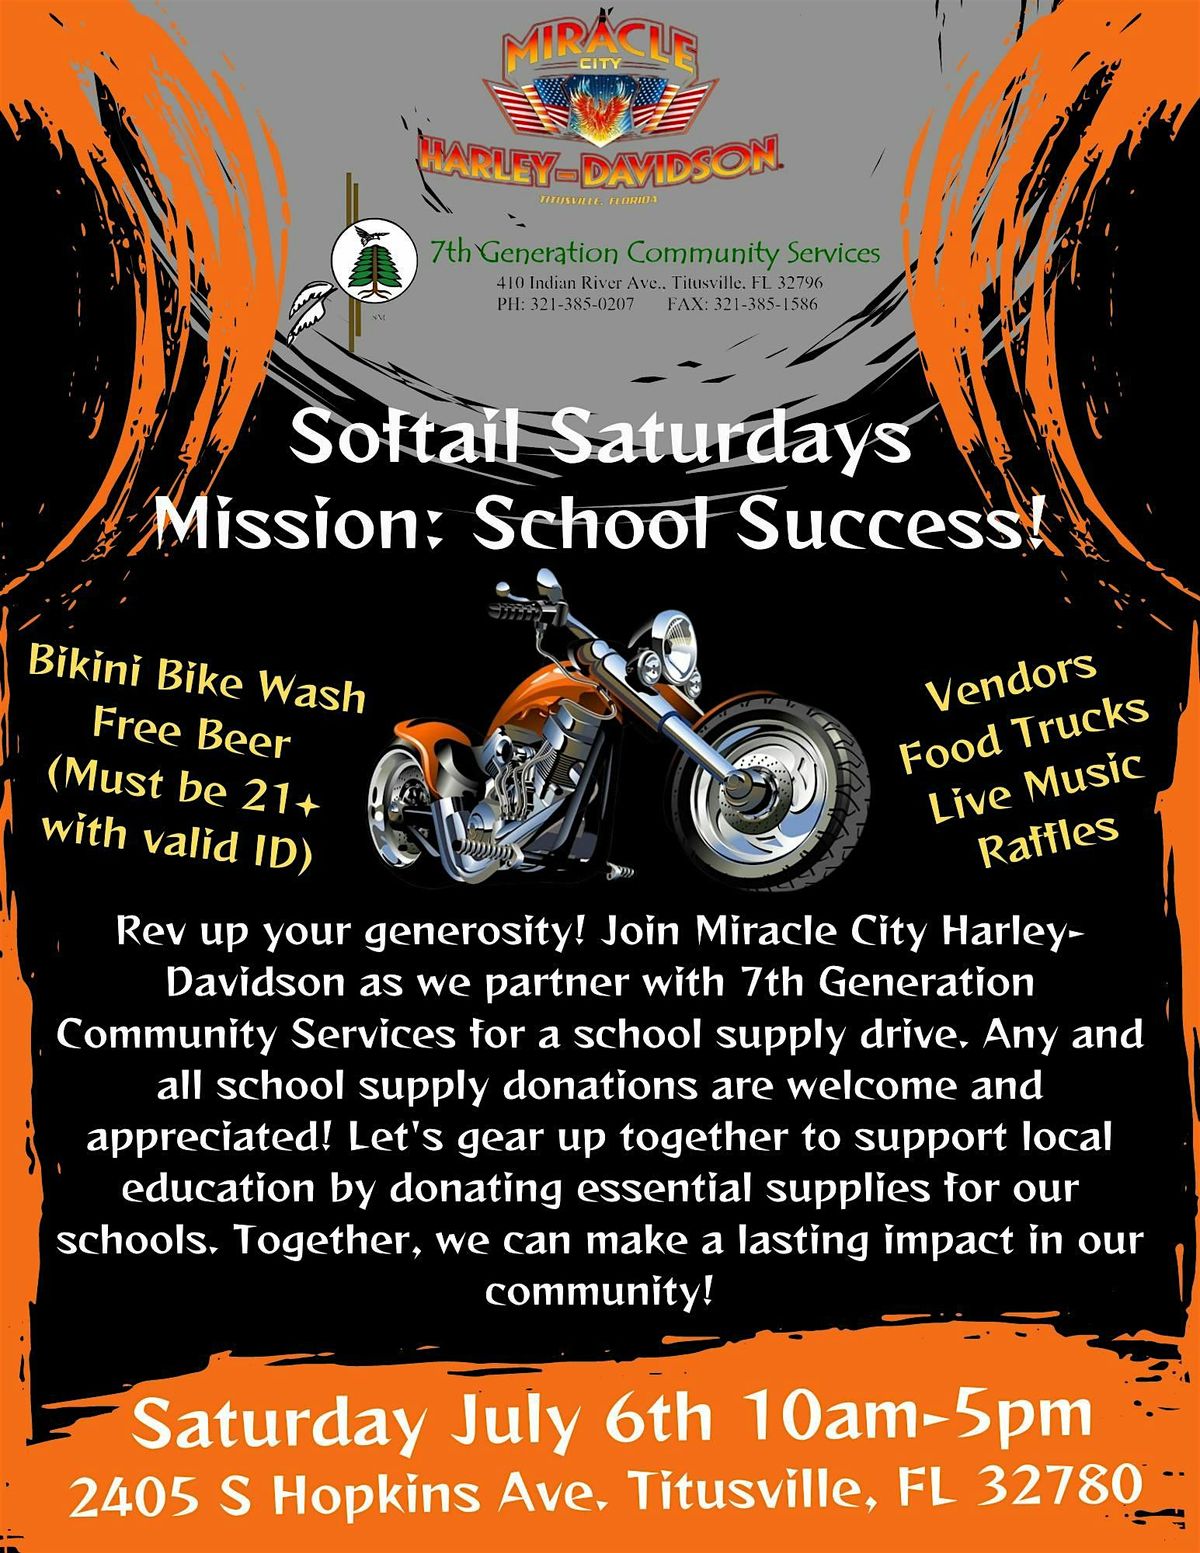 Mission: School Success! School Supply Drive Kick-Off